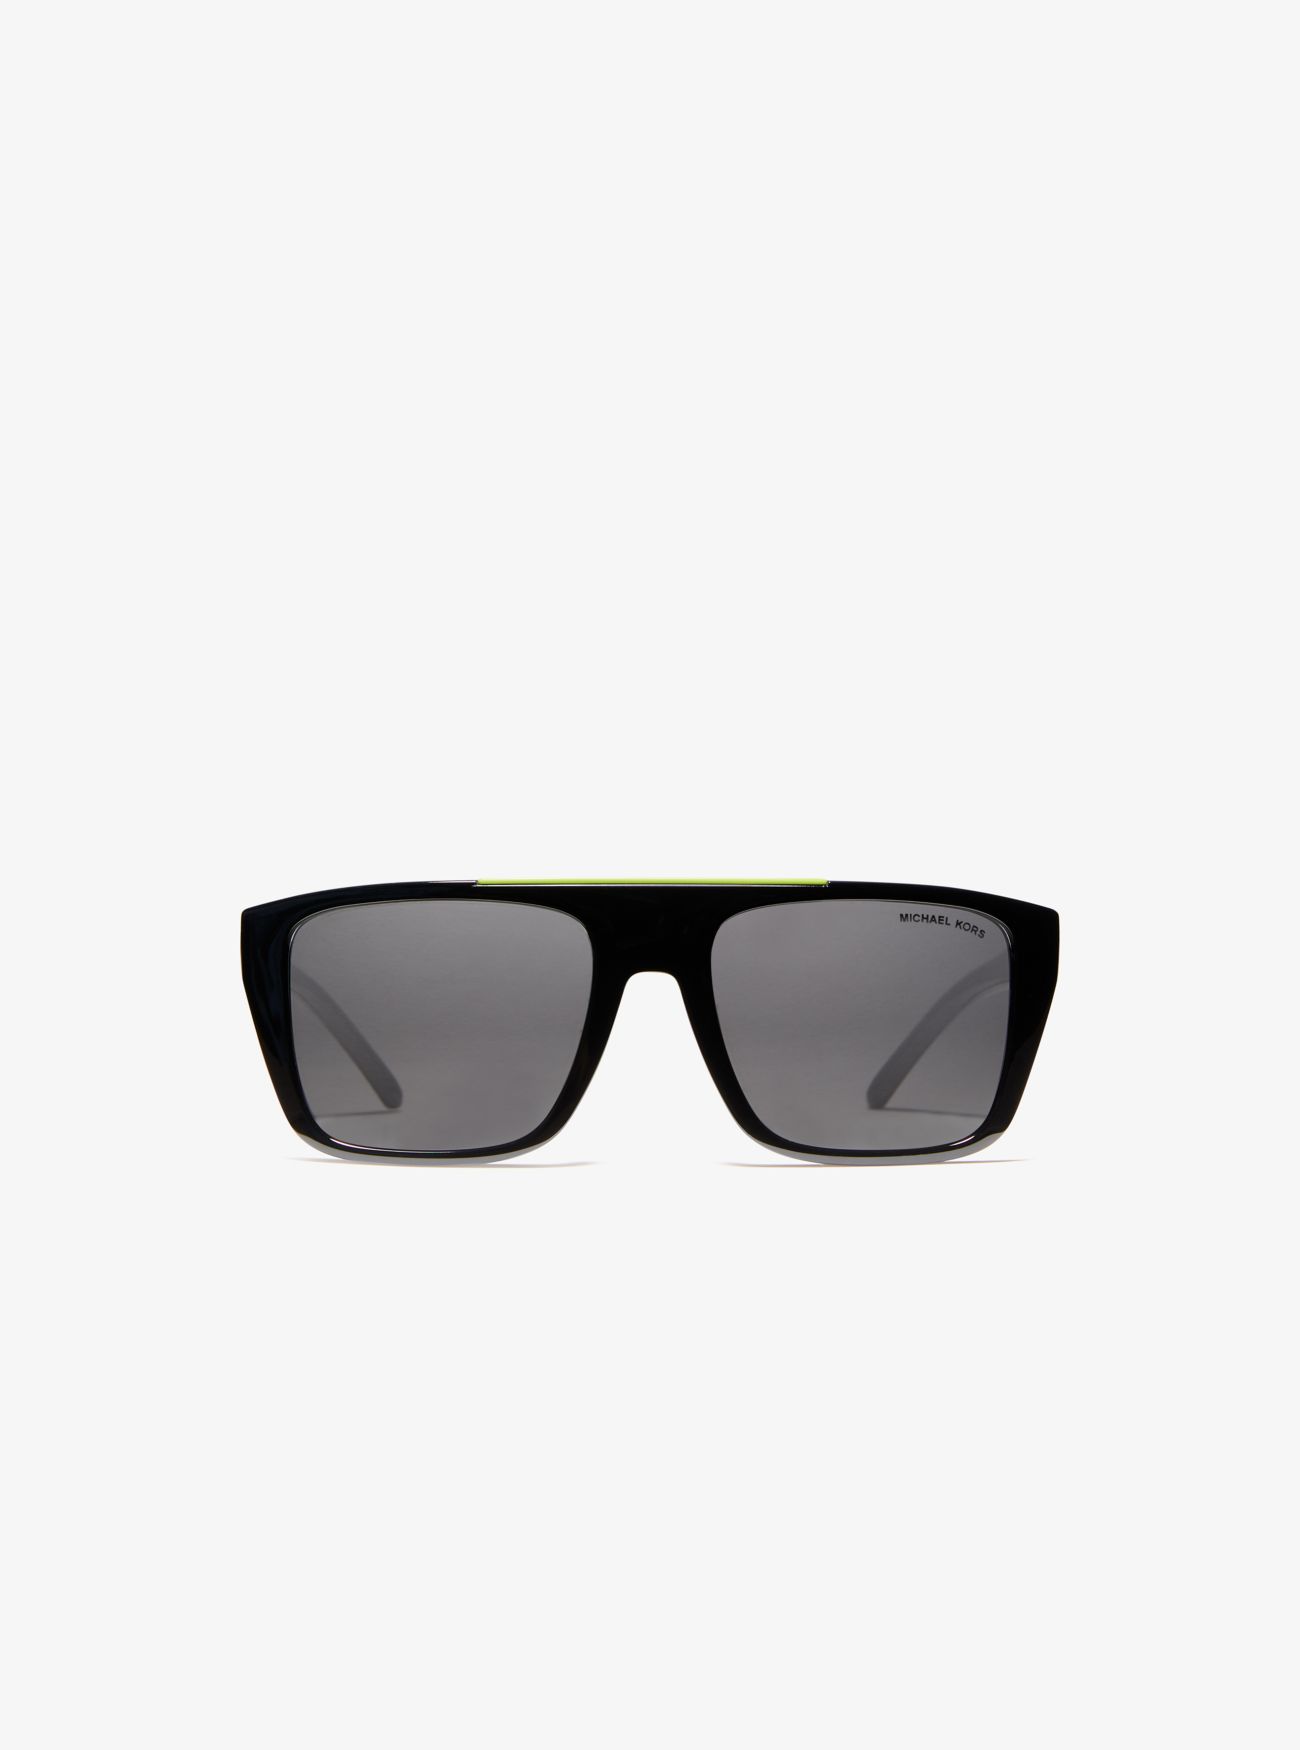 MK Burbank Sunglasses - Limeade - Michael Kors